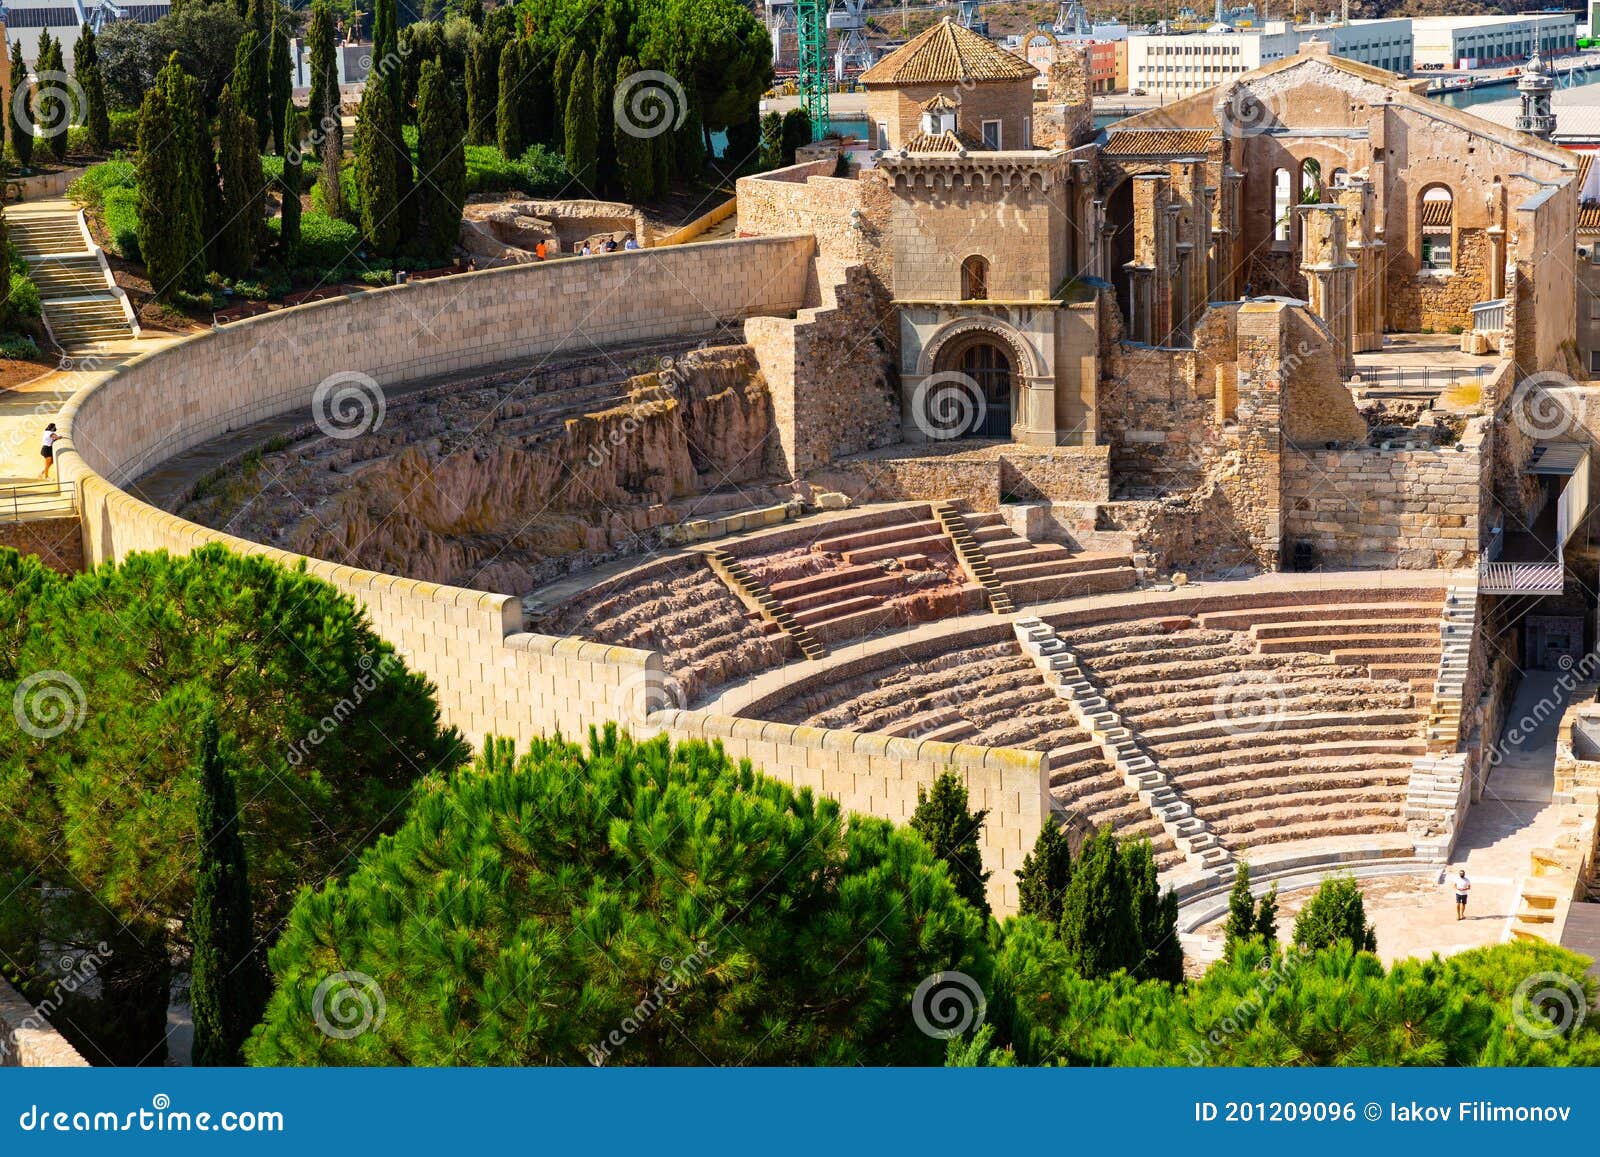 ruins of roman amphitheater in cartagena port city, southeastern spain